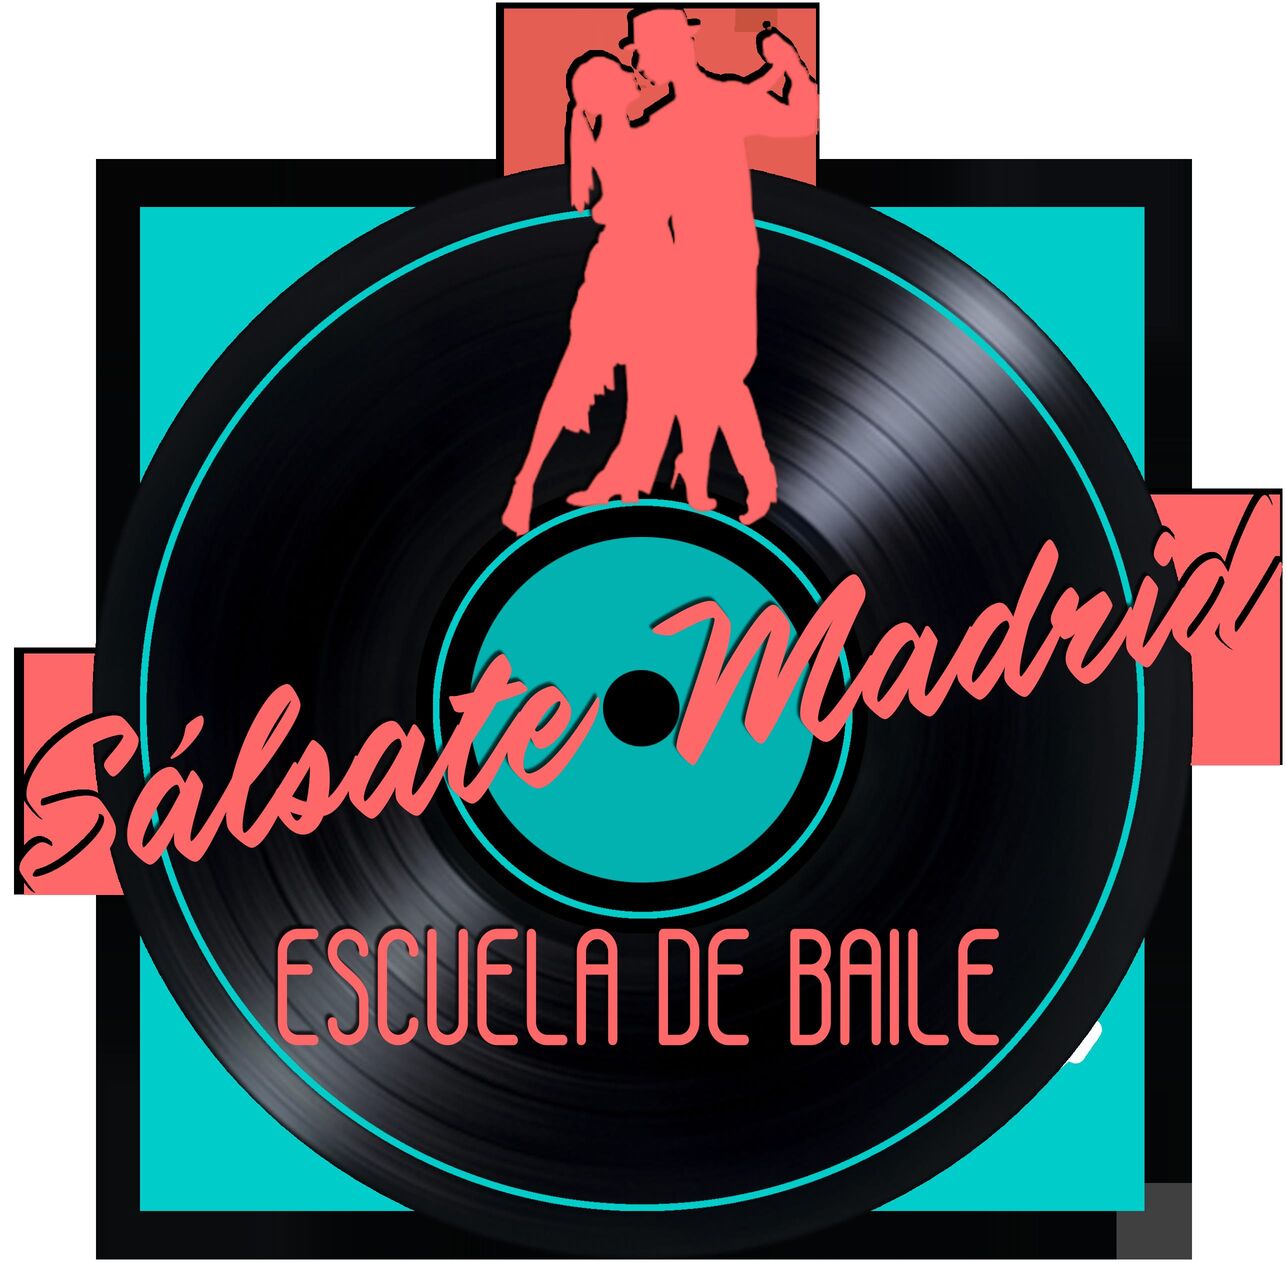 Sálsate Madrid Escuela de Baile